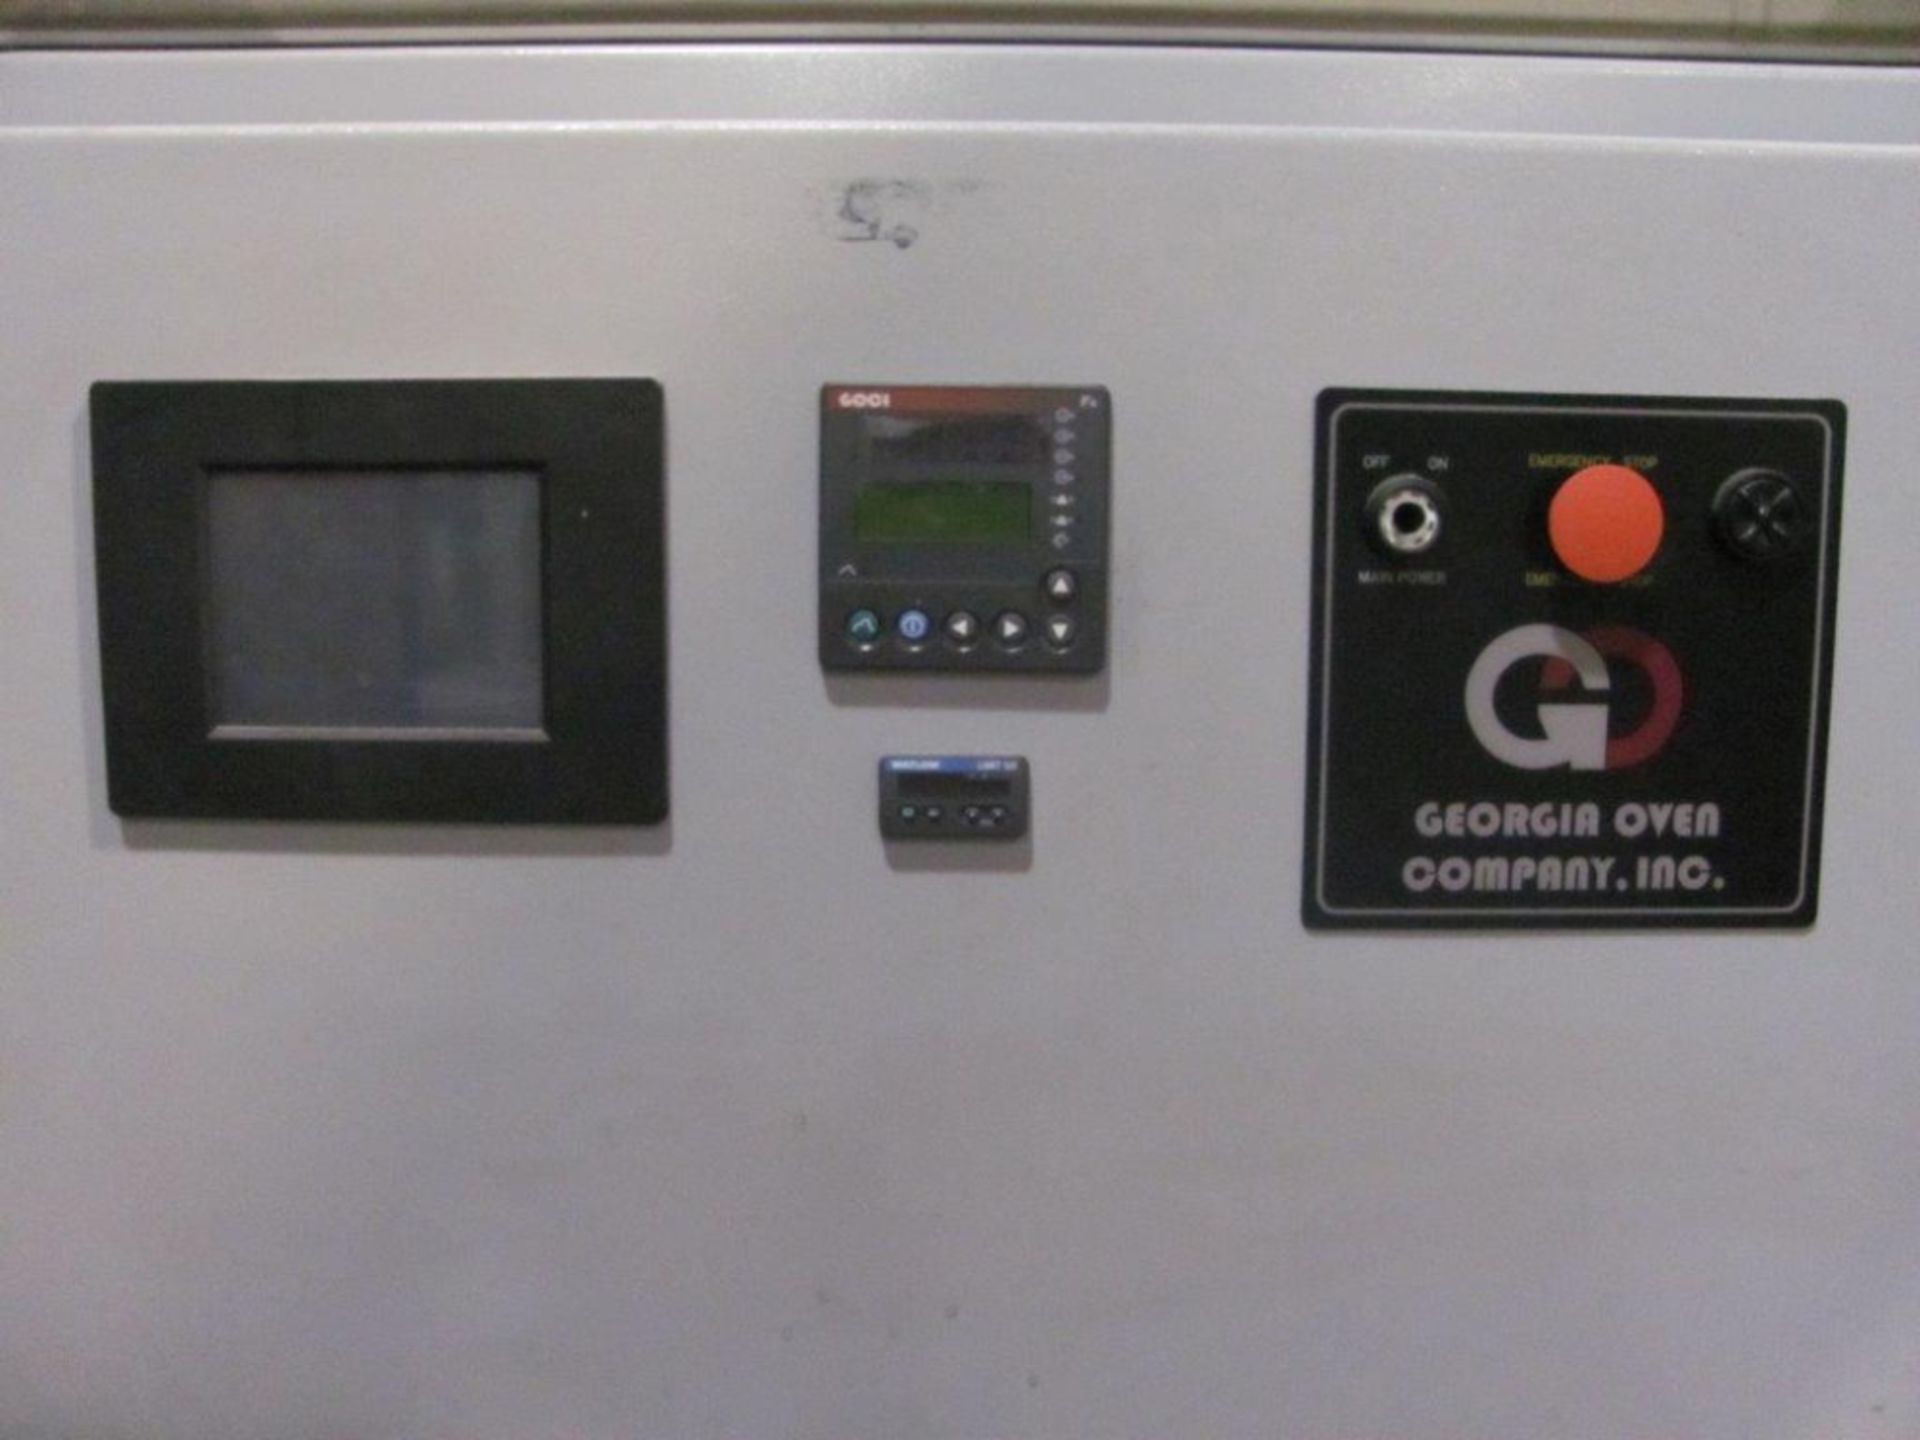 Georgia Oven pass-through Liquid Dryer - Image 3 of 3